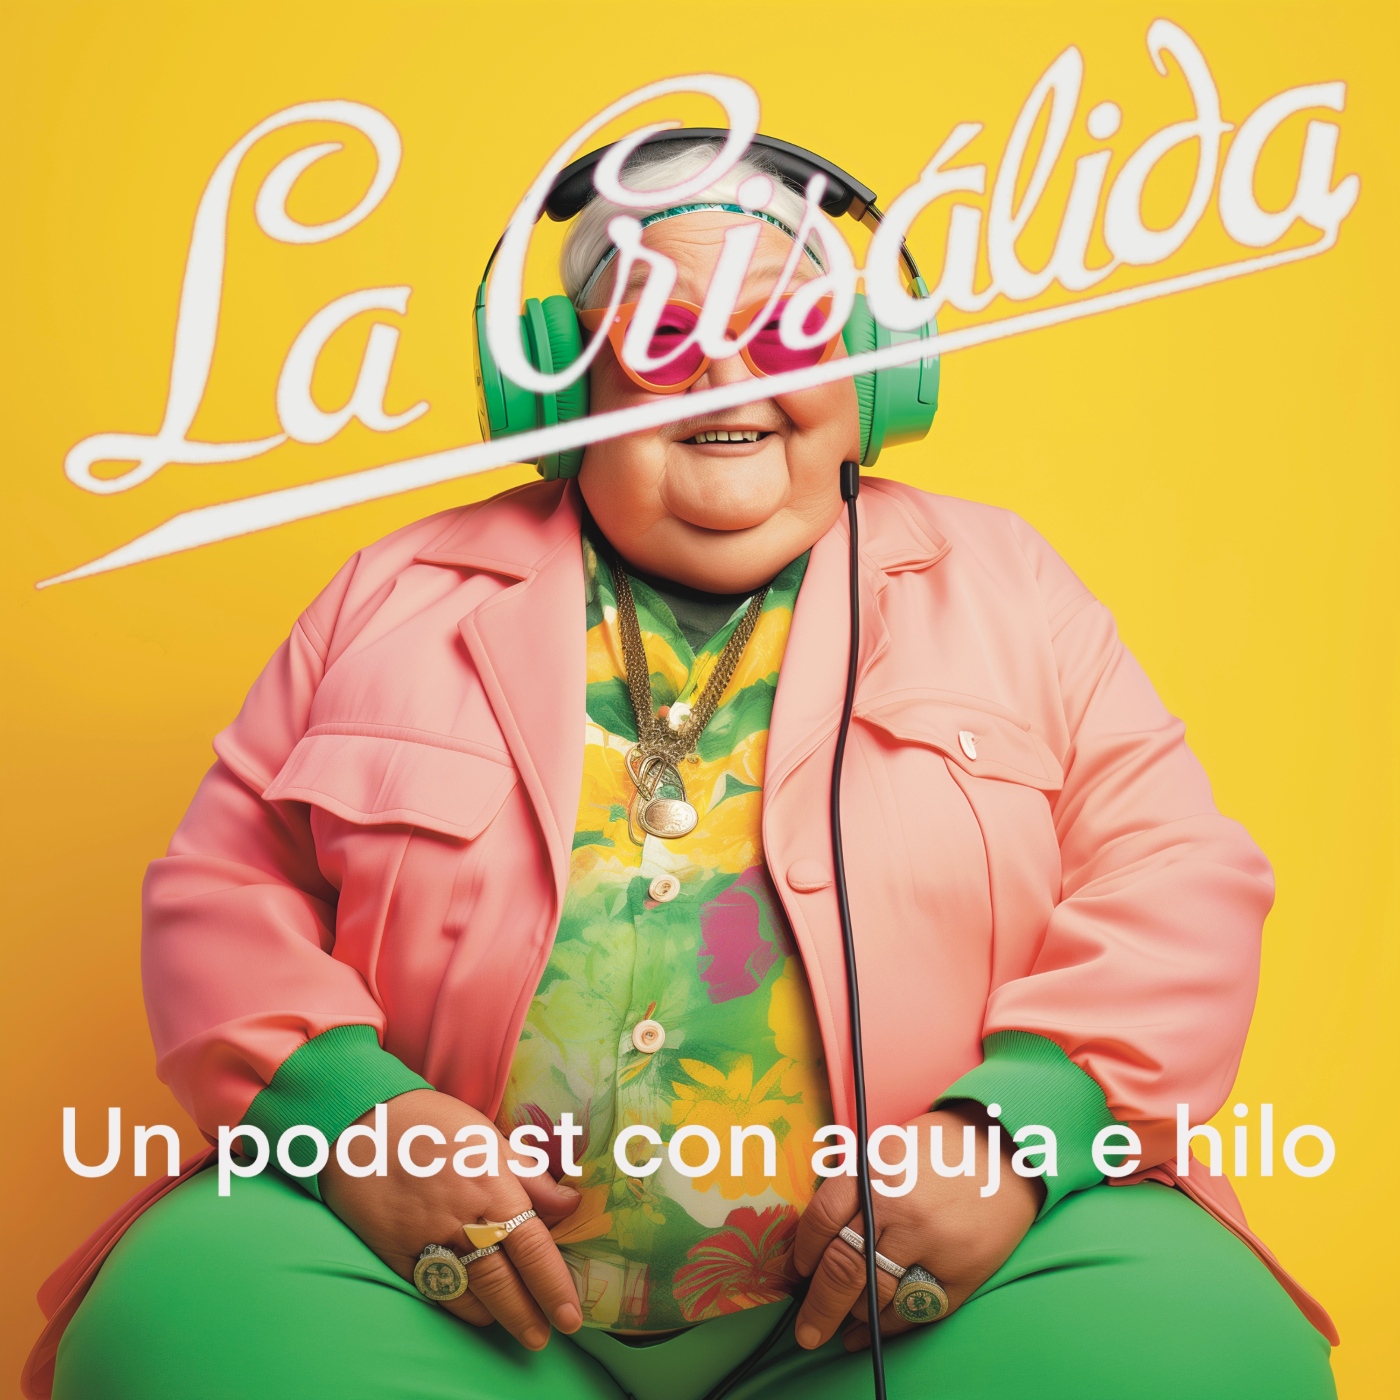 Ready go to ... https://www.ivoox.com/podcast-crisalida-podcast-aguja-e-hilo_sq_f12343817_1.html [ La Crisálida, un podcast con aguja e hilo - Podcast en iVoox]